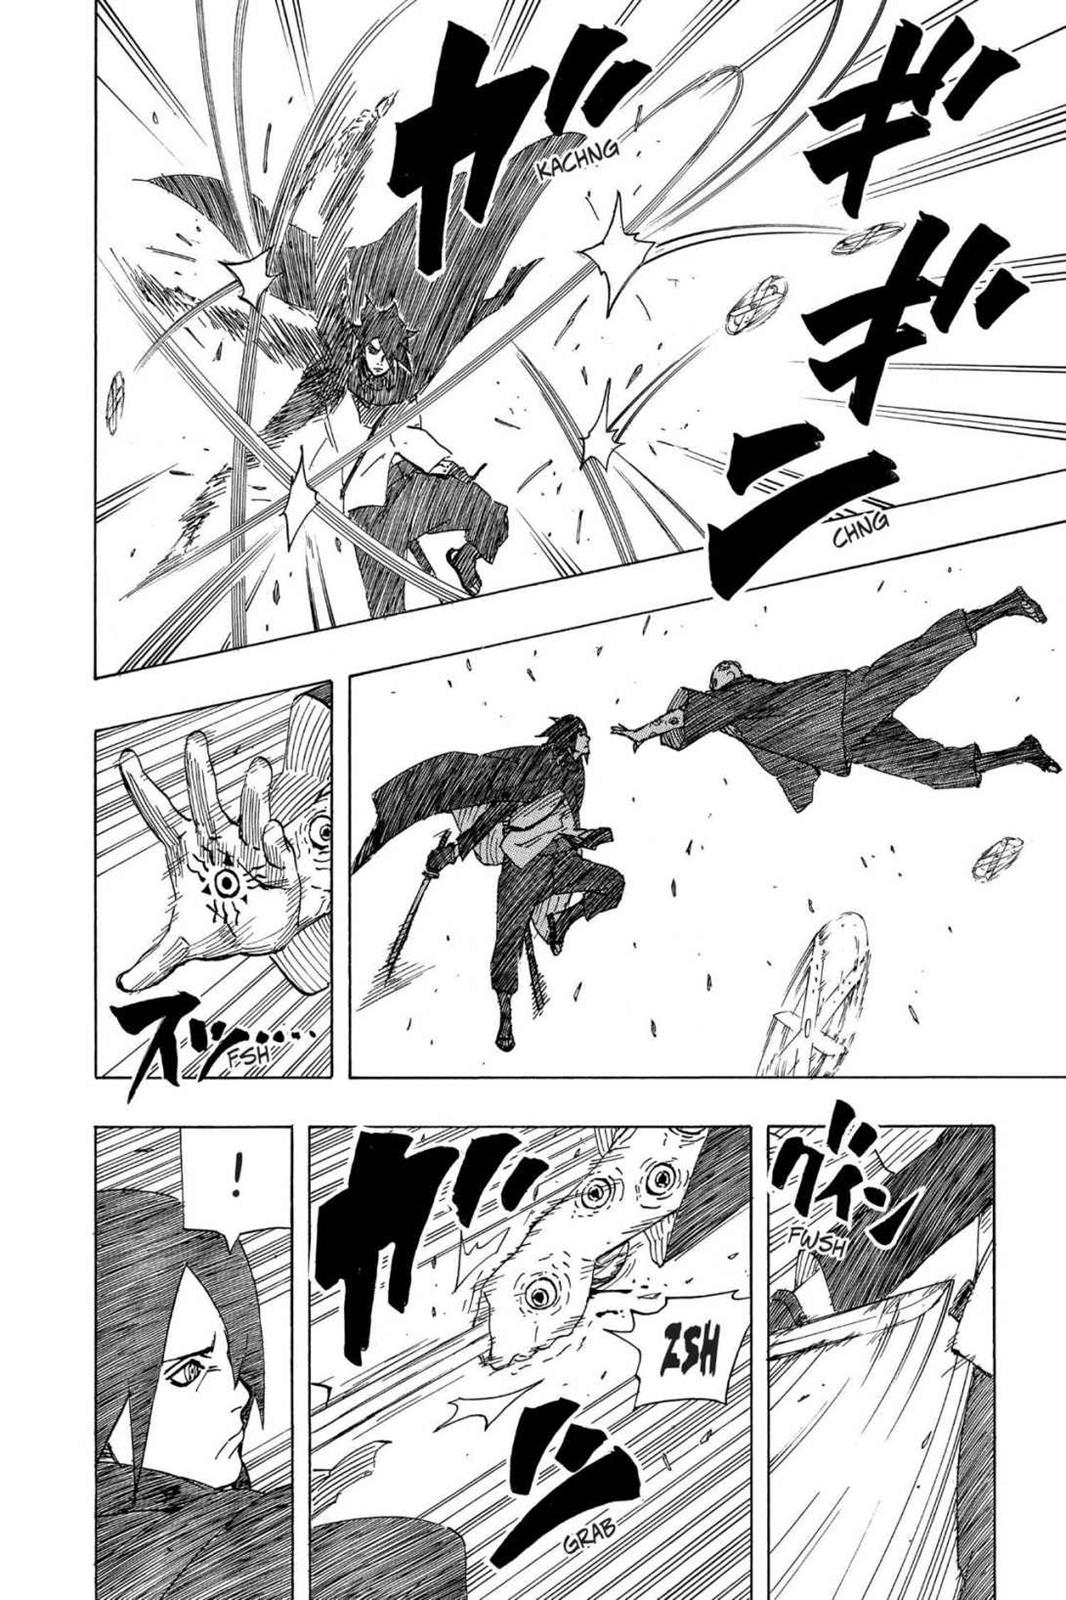 Sakura (Boruto) vs Naruto (Boruto/Sem Kurama)  - Página 6 0006-002